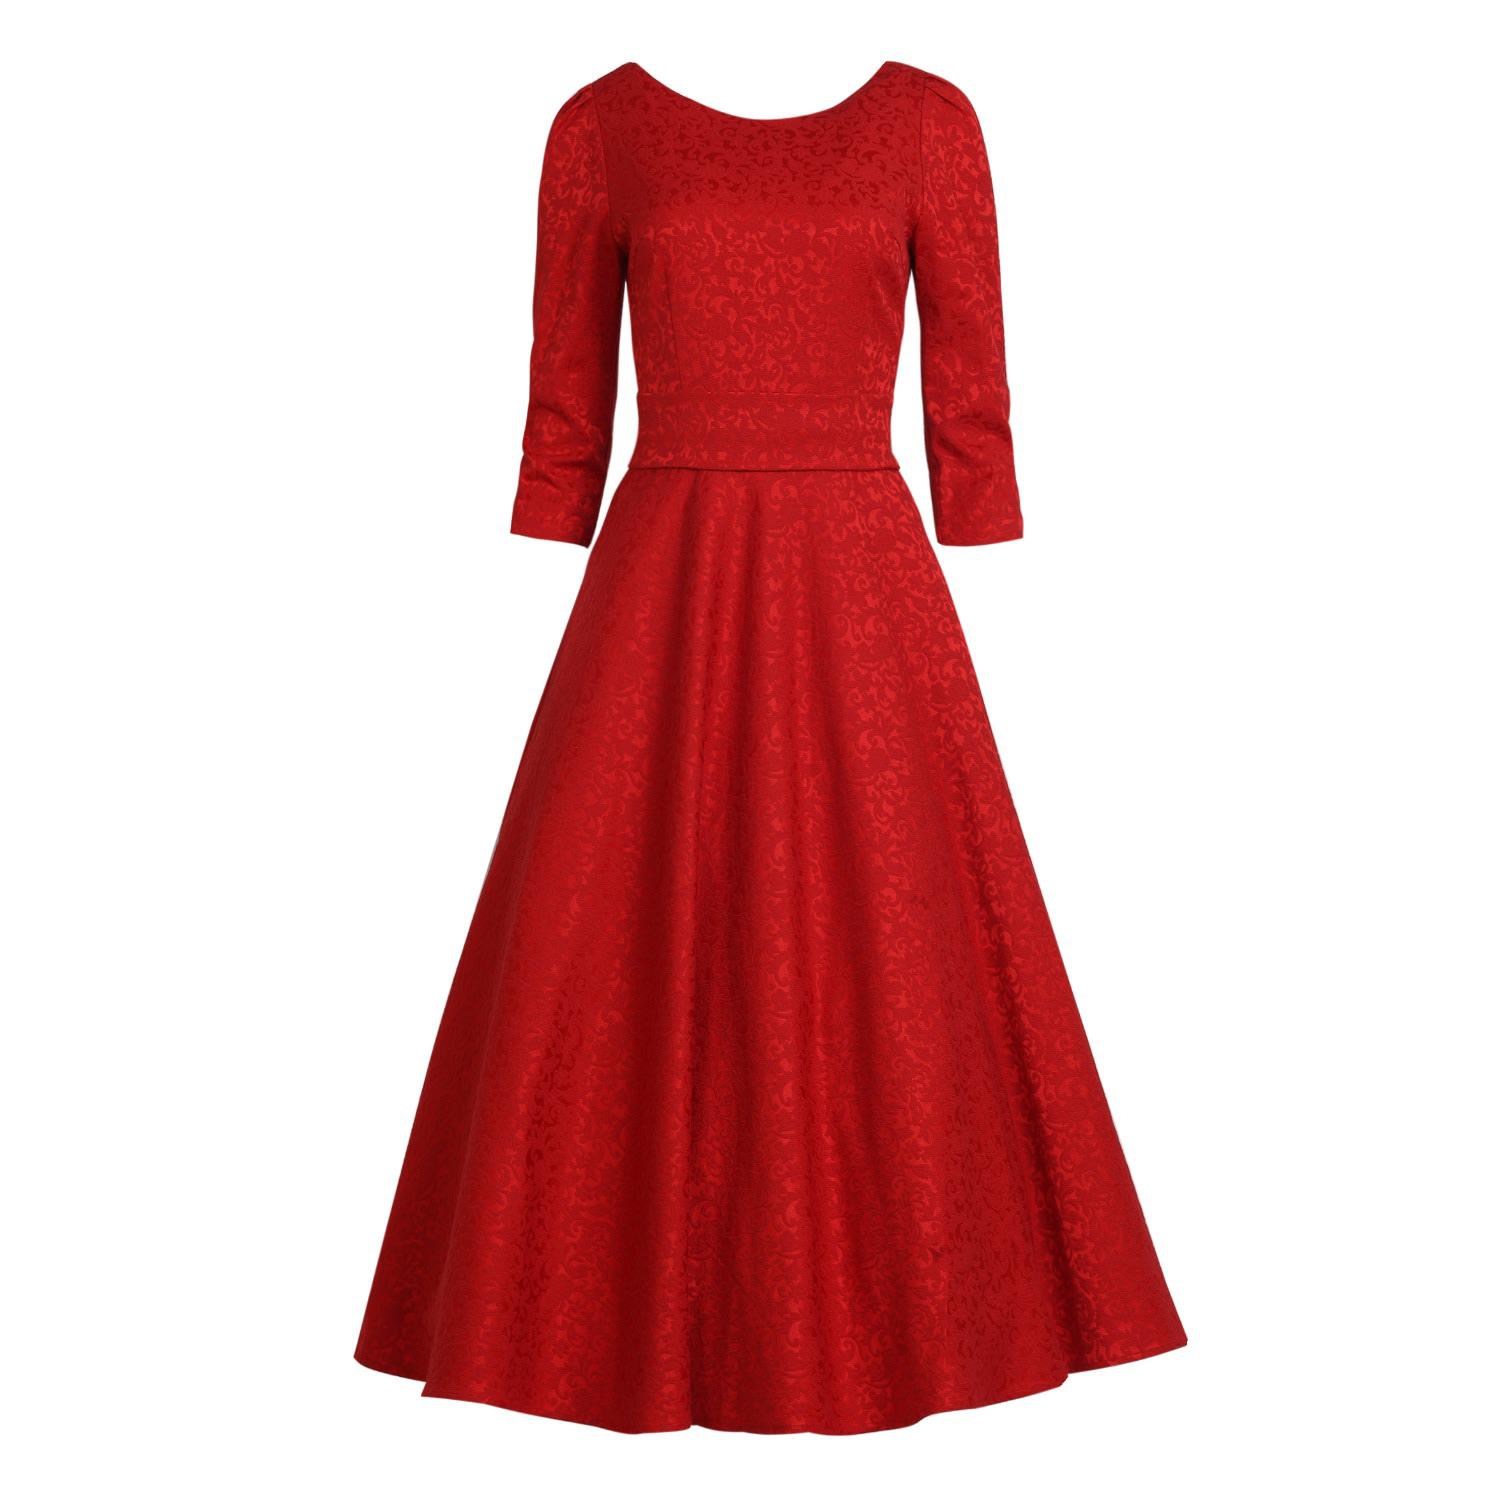 MATSOUR'I Cotton Jacquard Dress Alyzee Red - Save 13% - Lyst